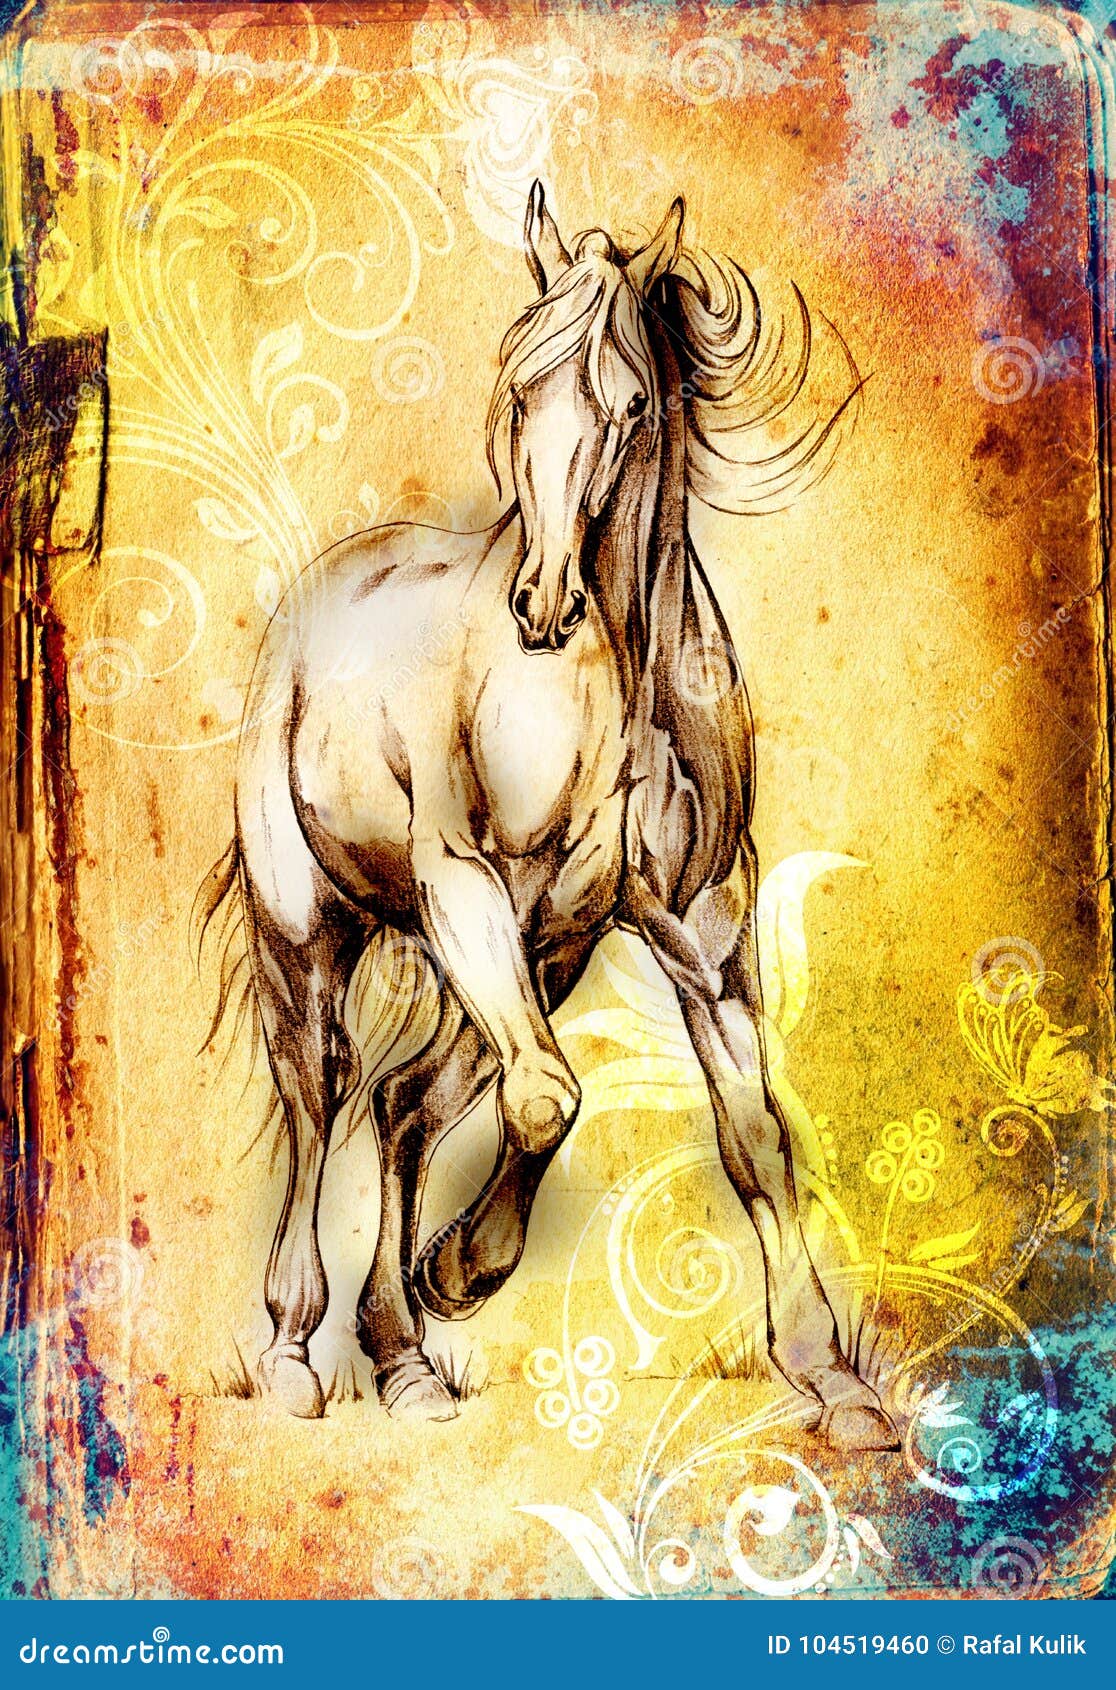 Beautiful Horse by RachelRie on DeviantArt